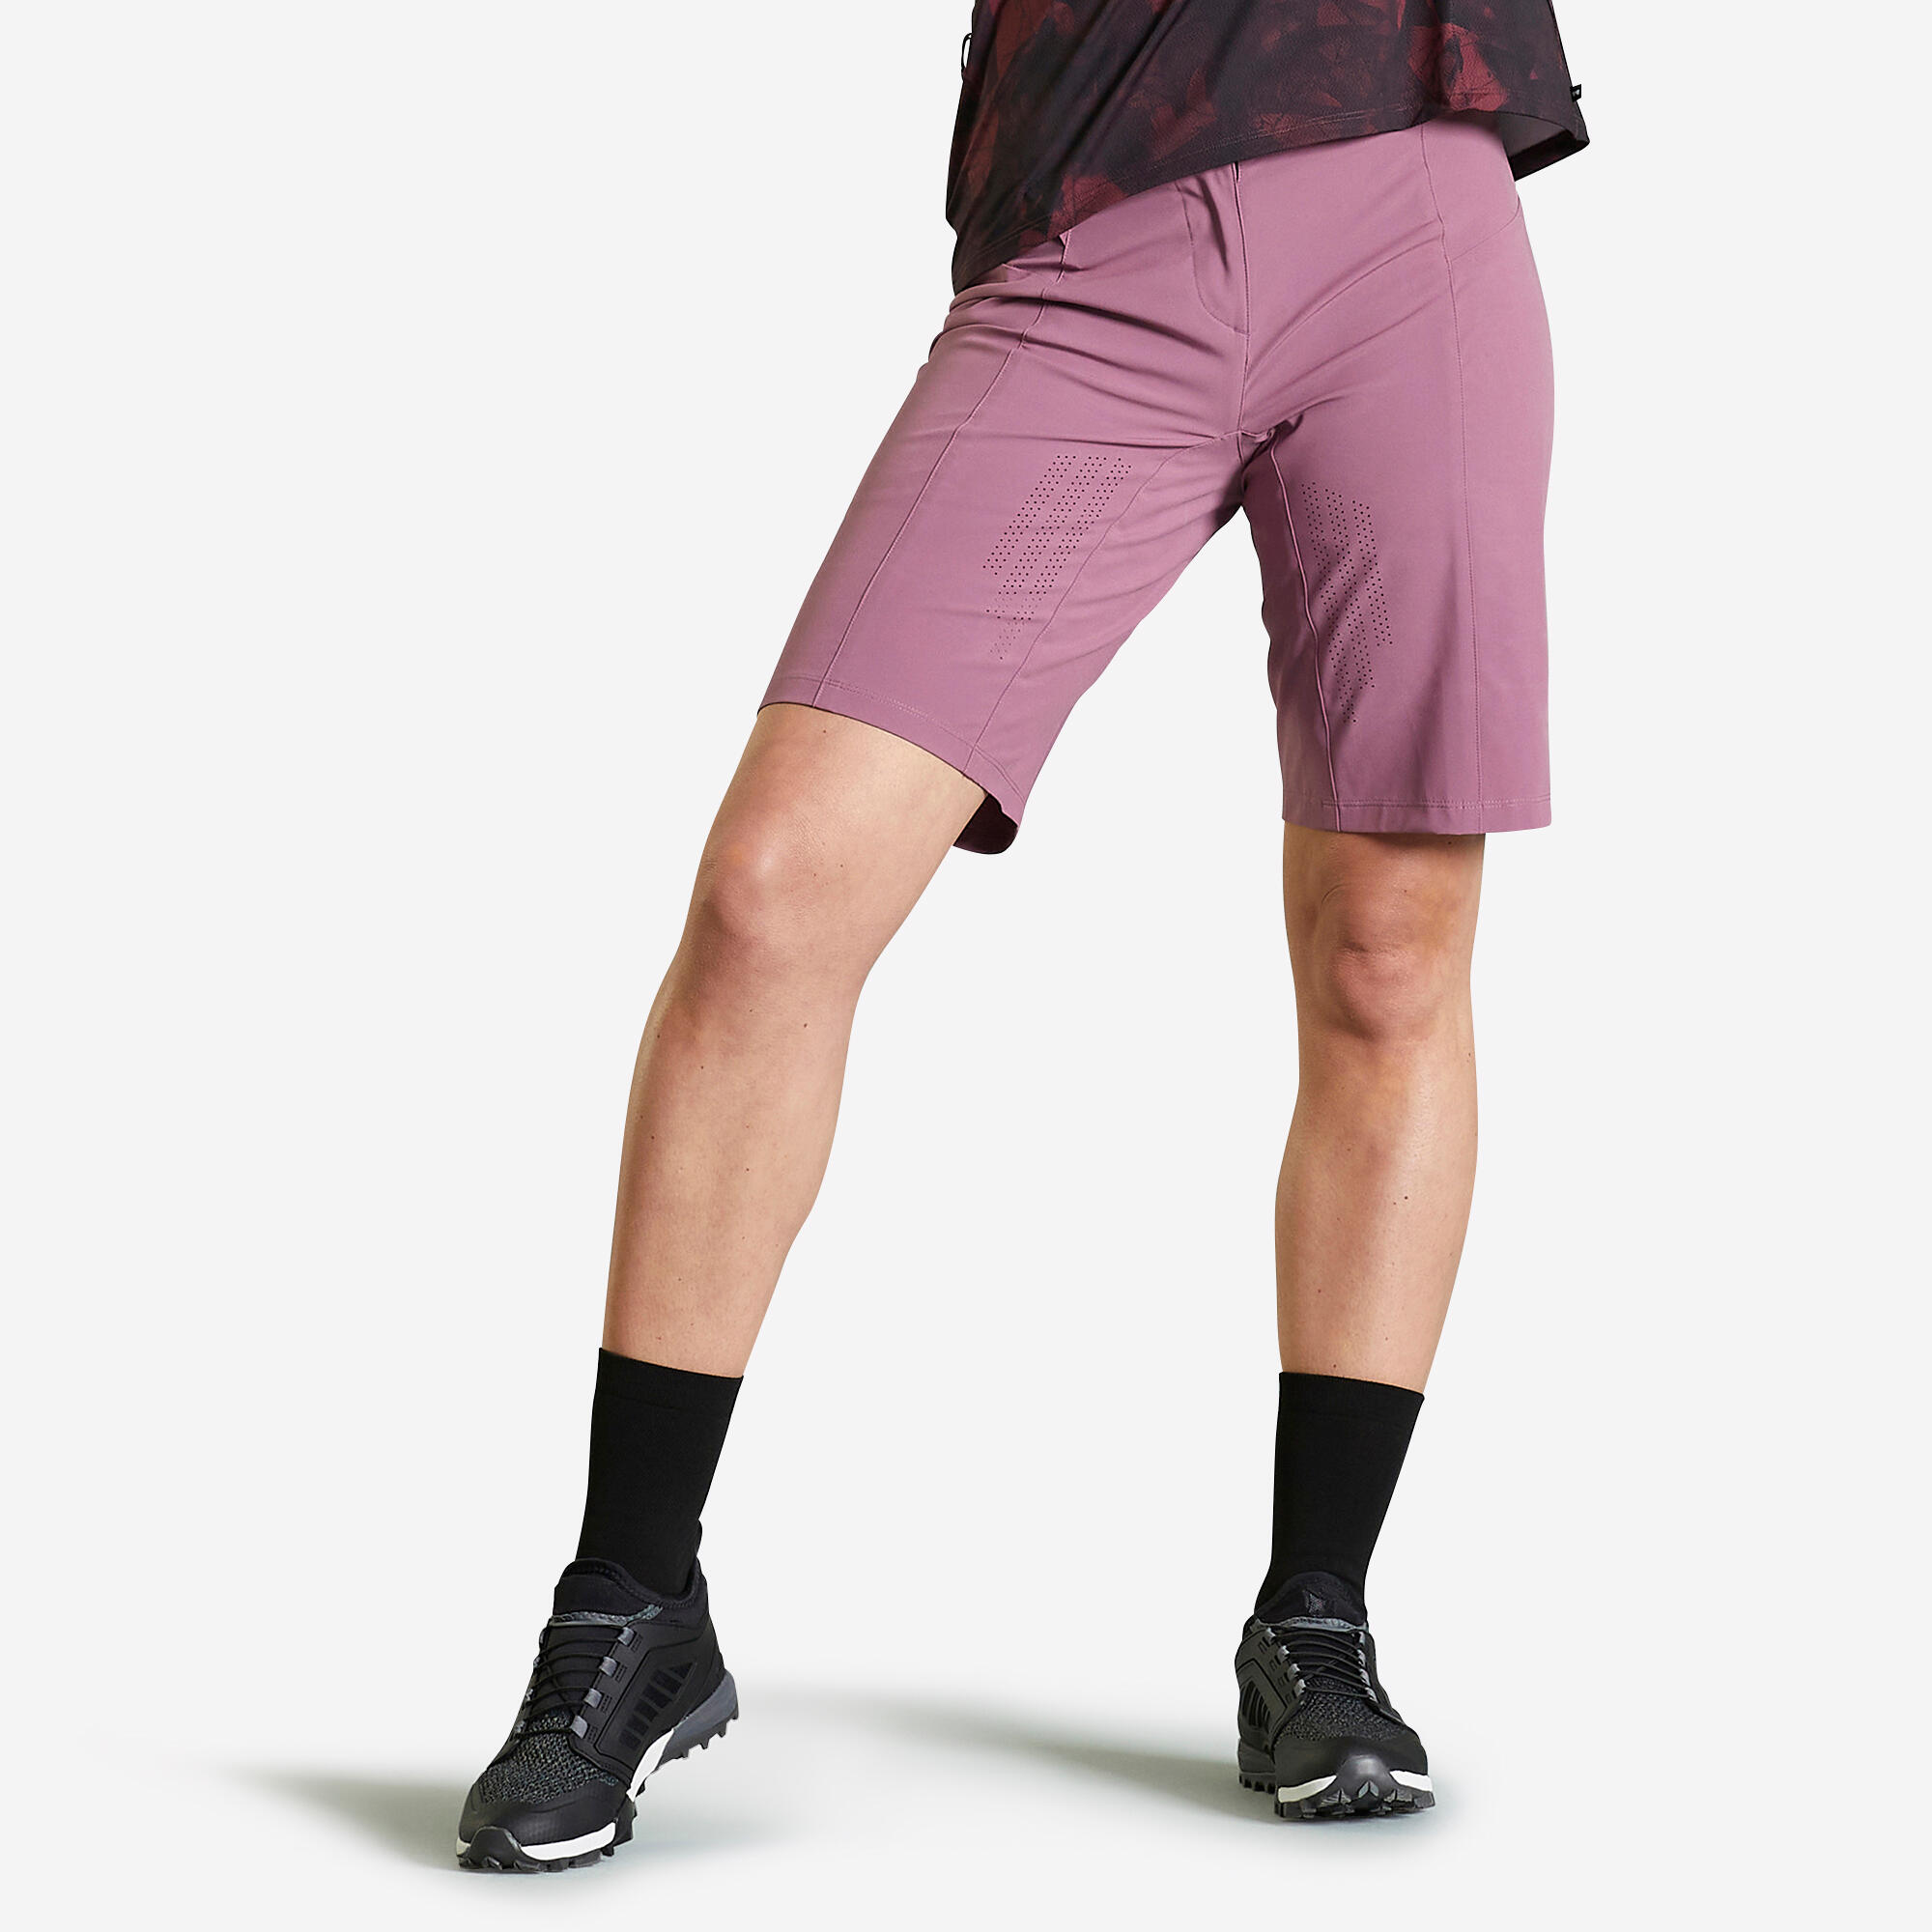 ROCKRIDER Women's Mountain Biking Shorts EXPL 700 - Pink